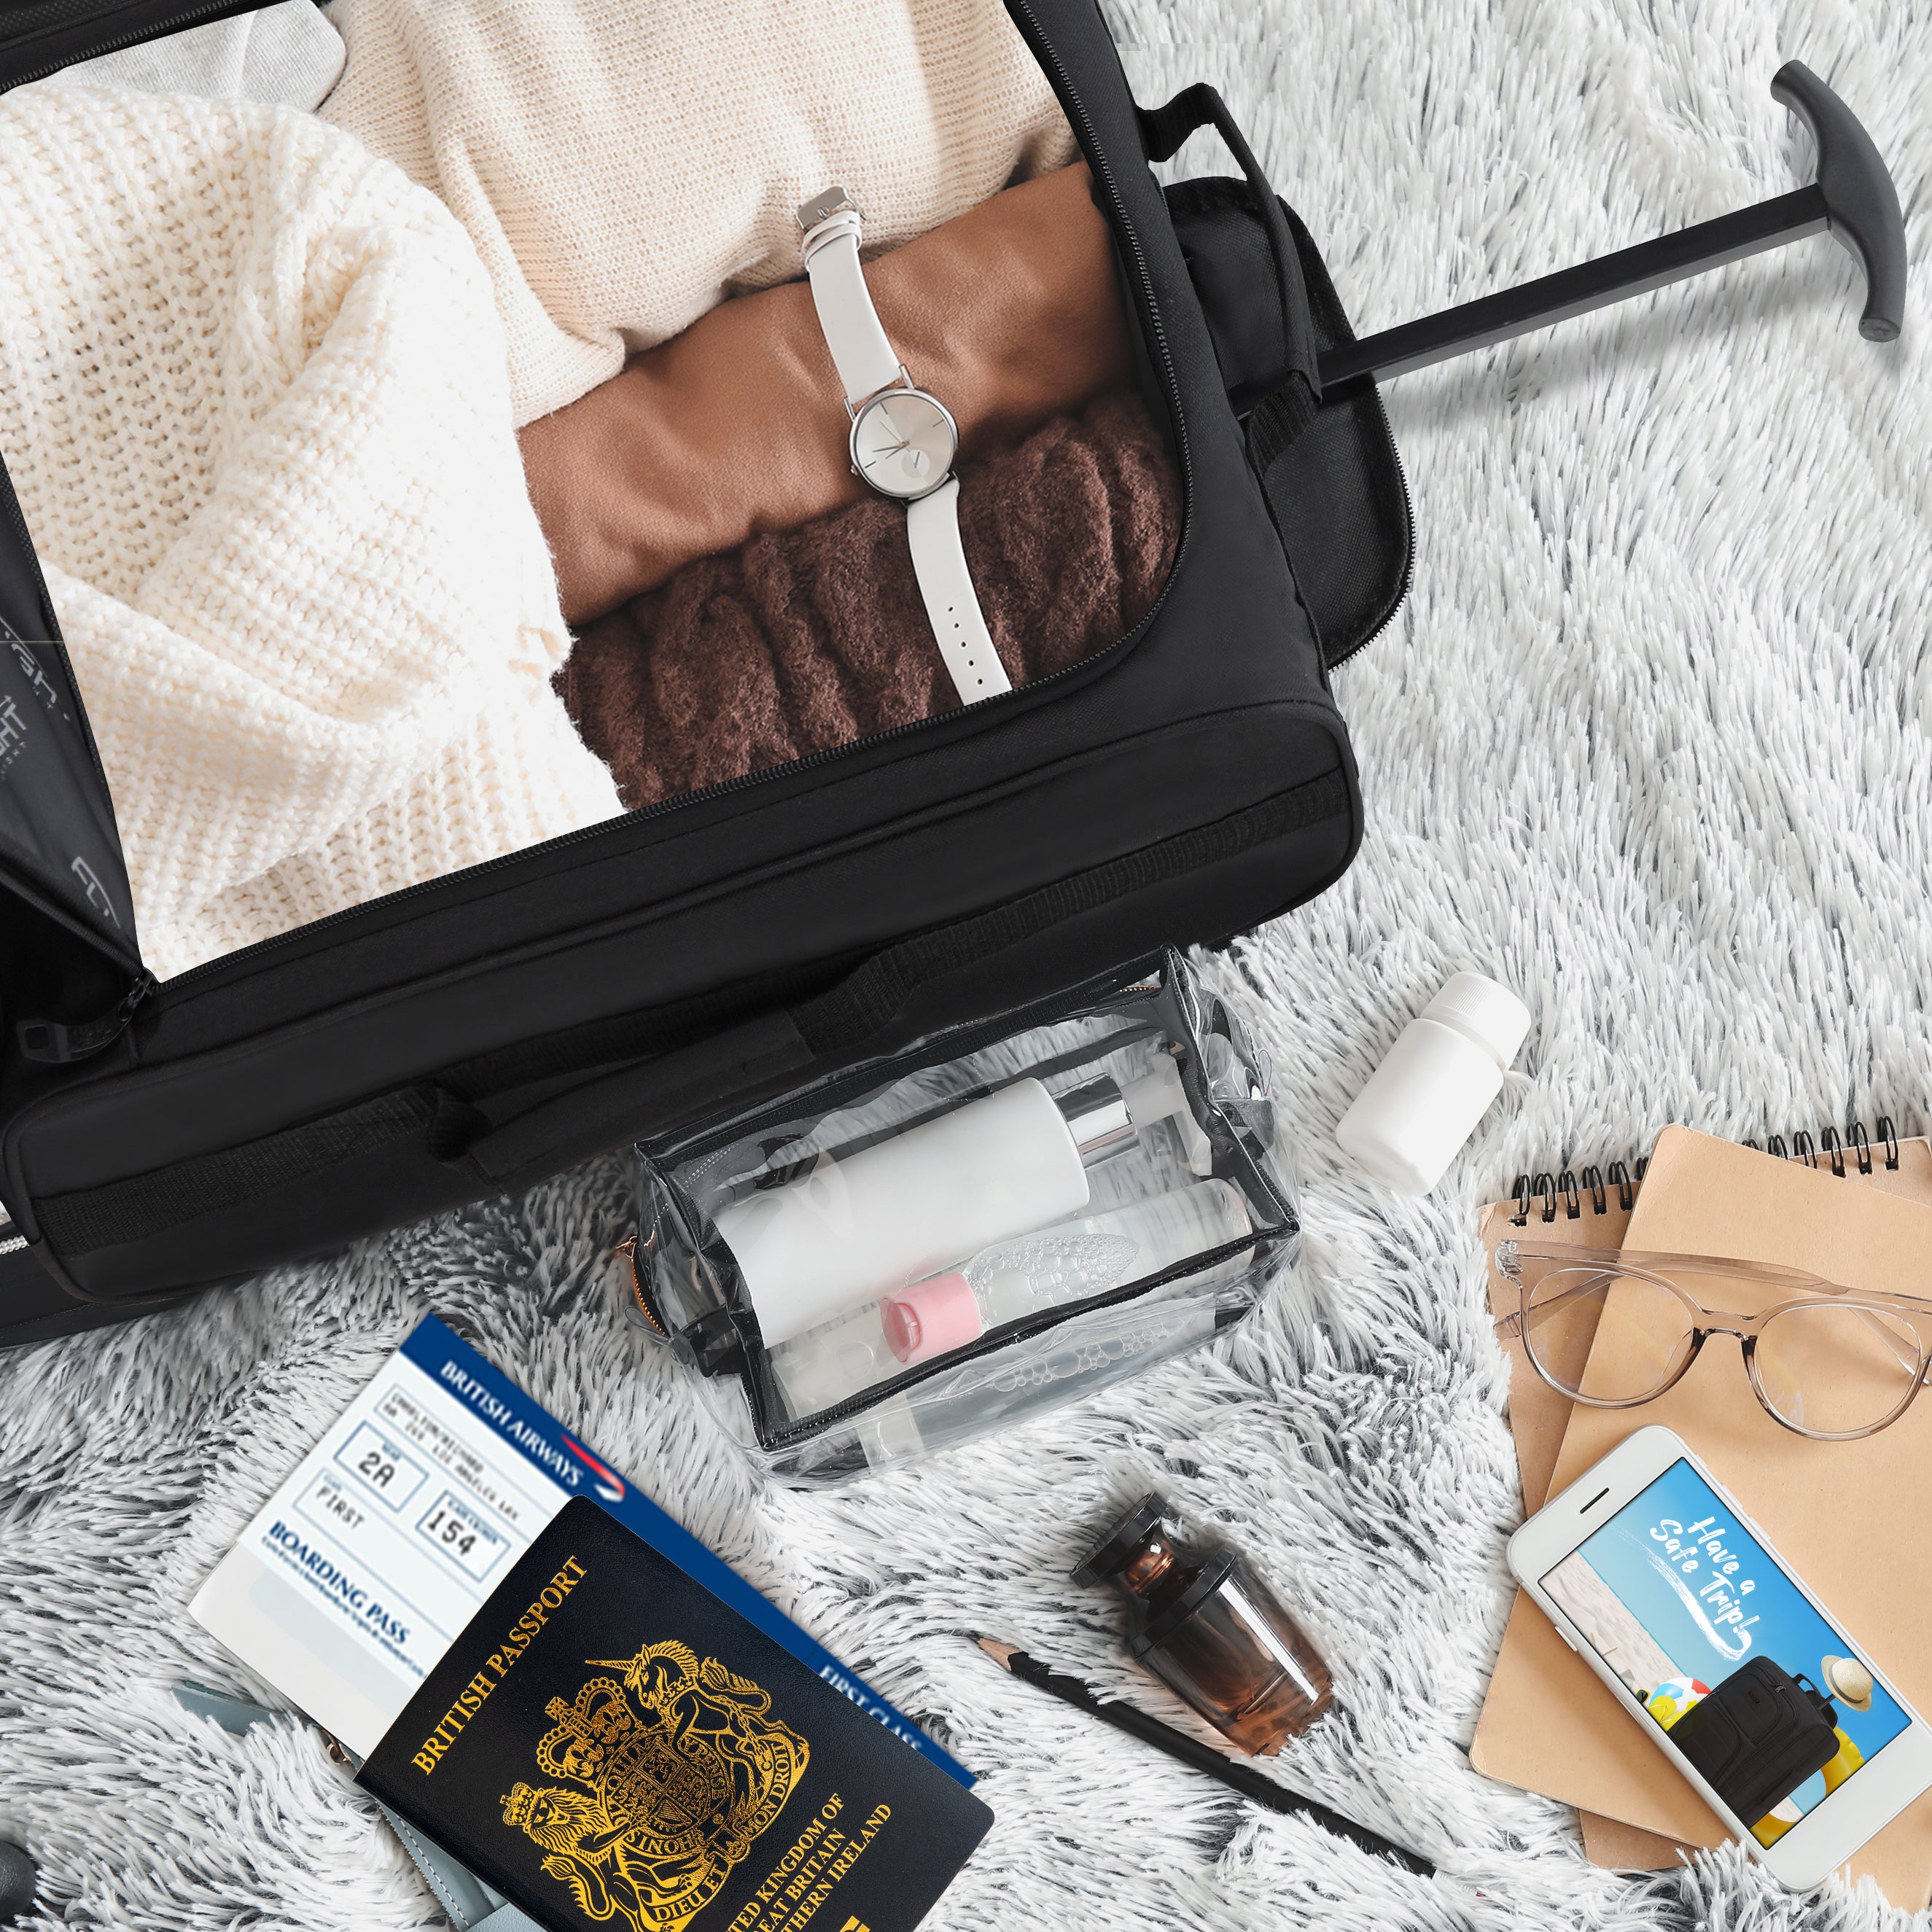 45x36x20cm 2 Wheel Soft Shell Suitcase